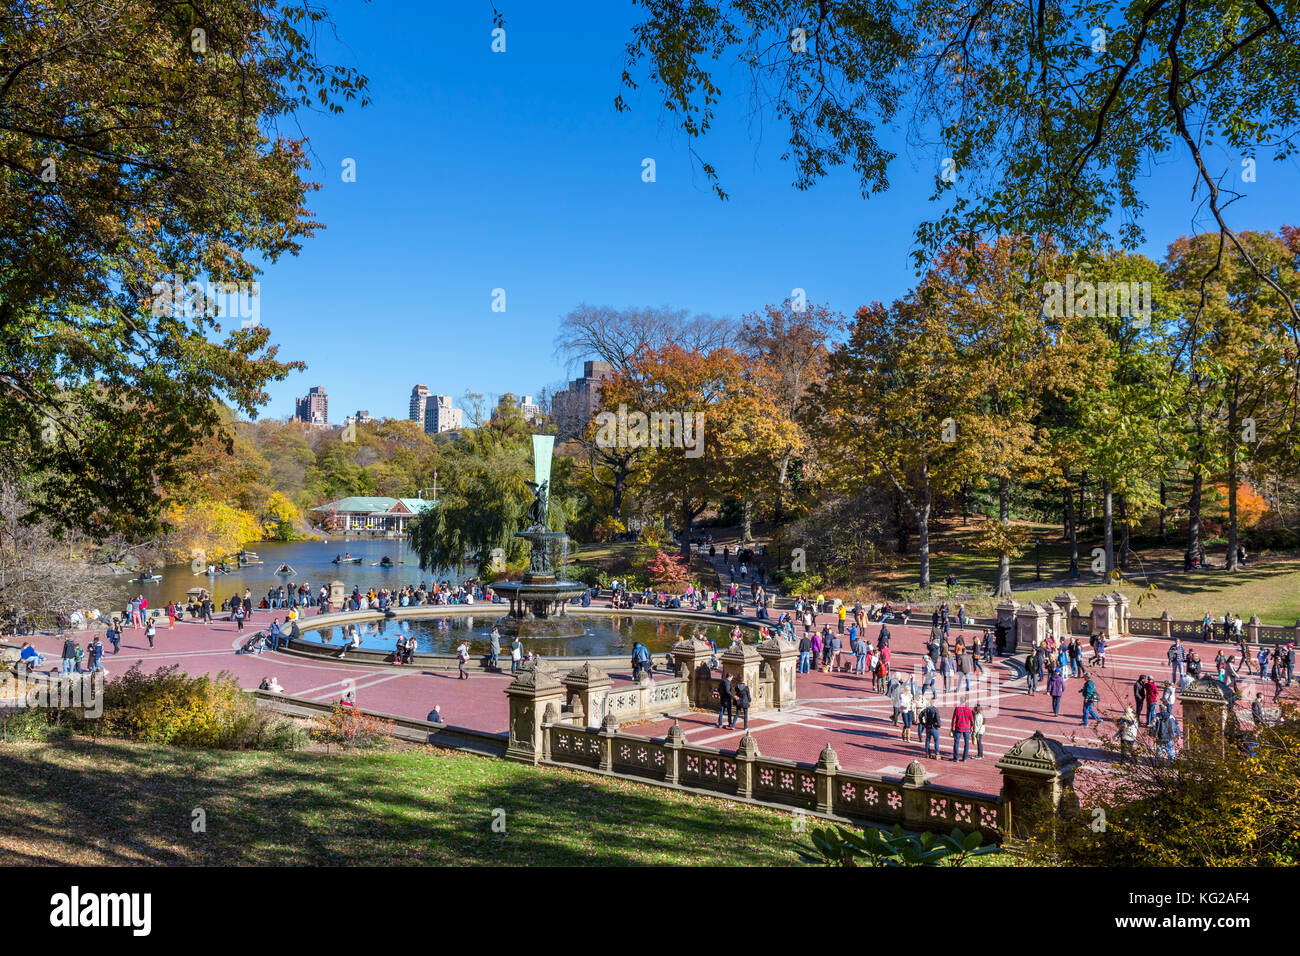 Bethesda Fountain, Central Park, New York City, NY, USA Banque D'Images